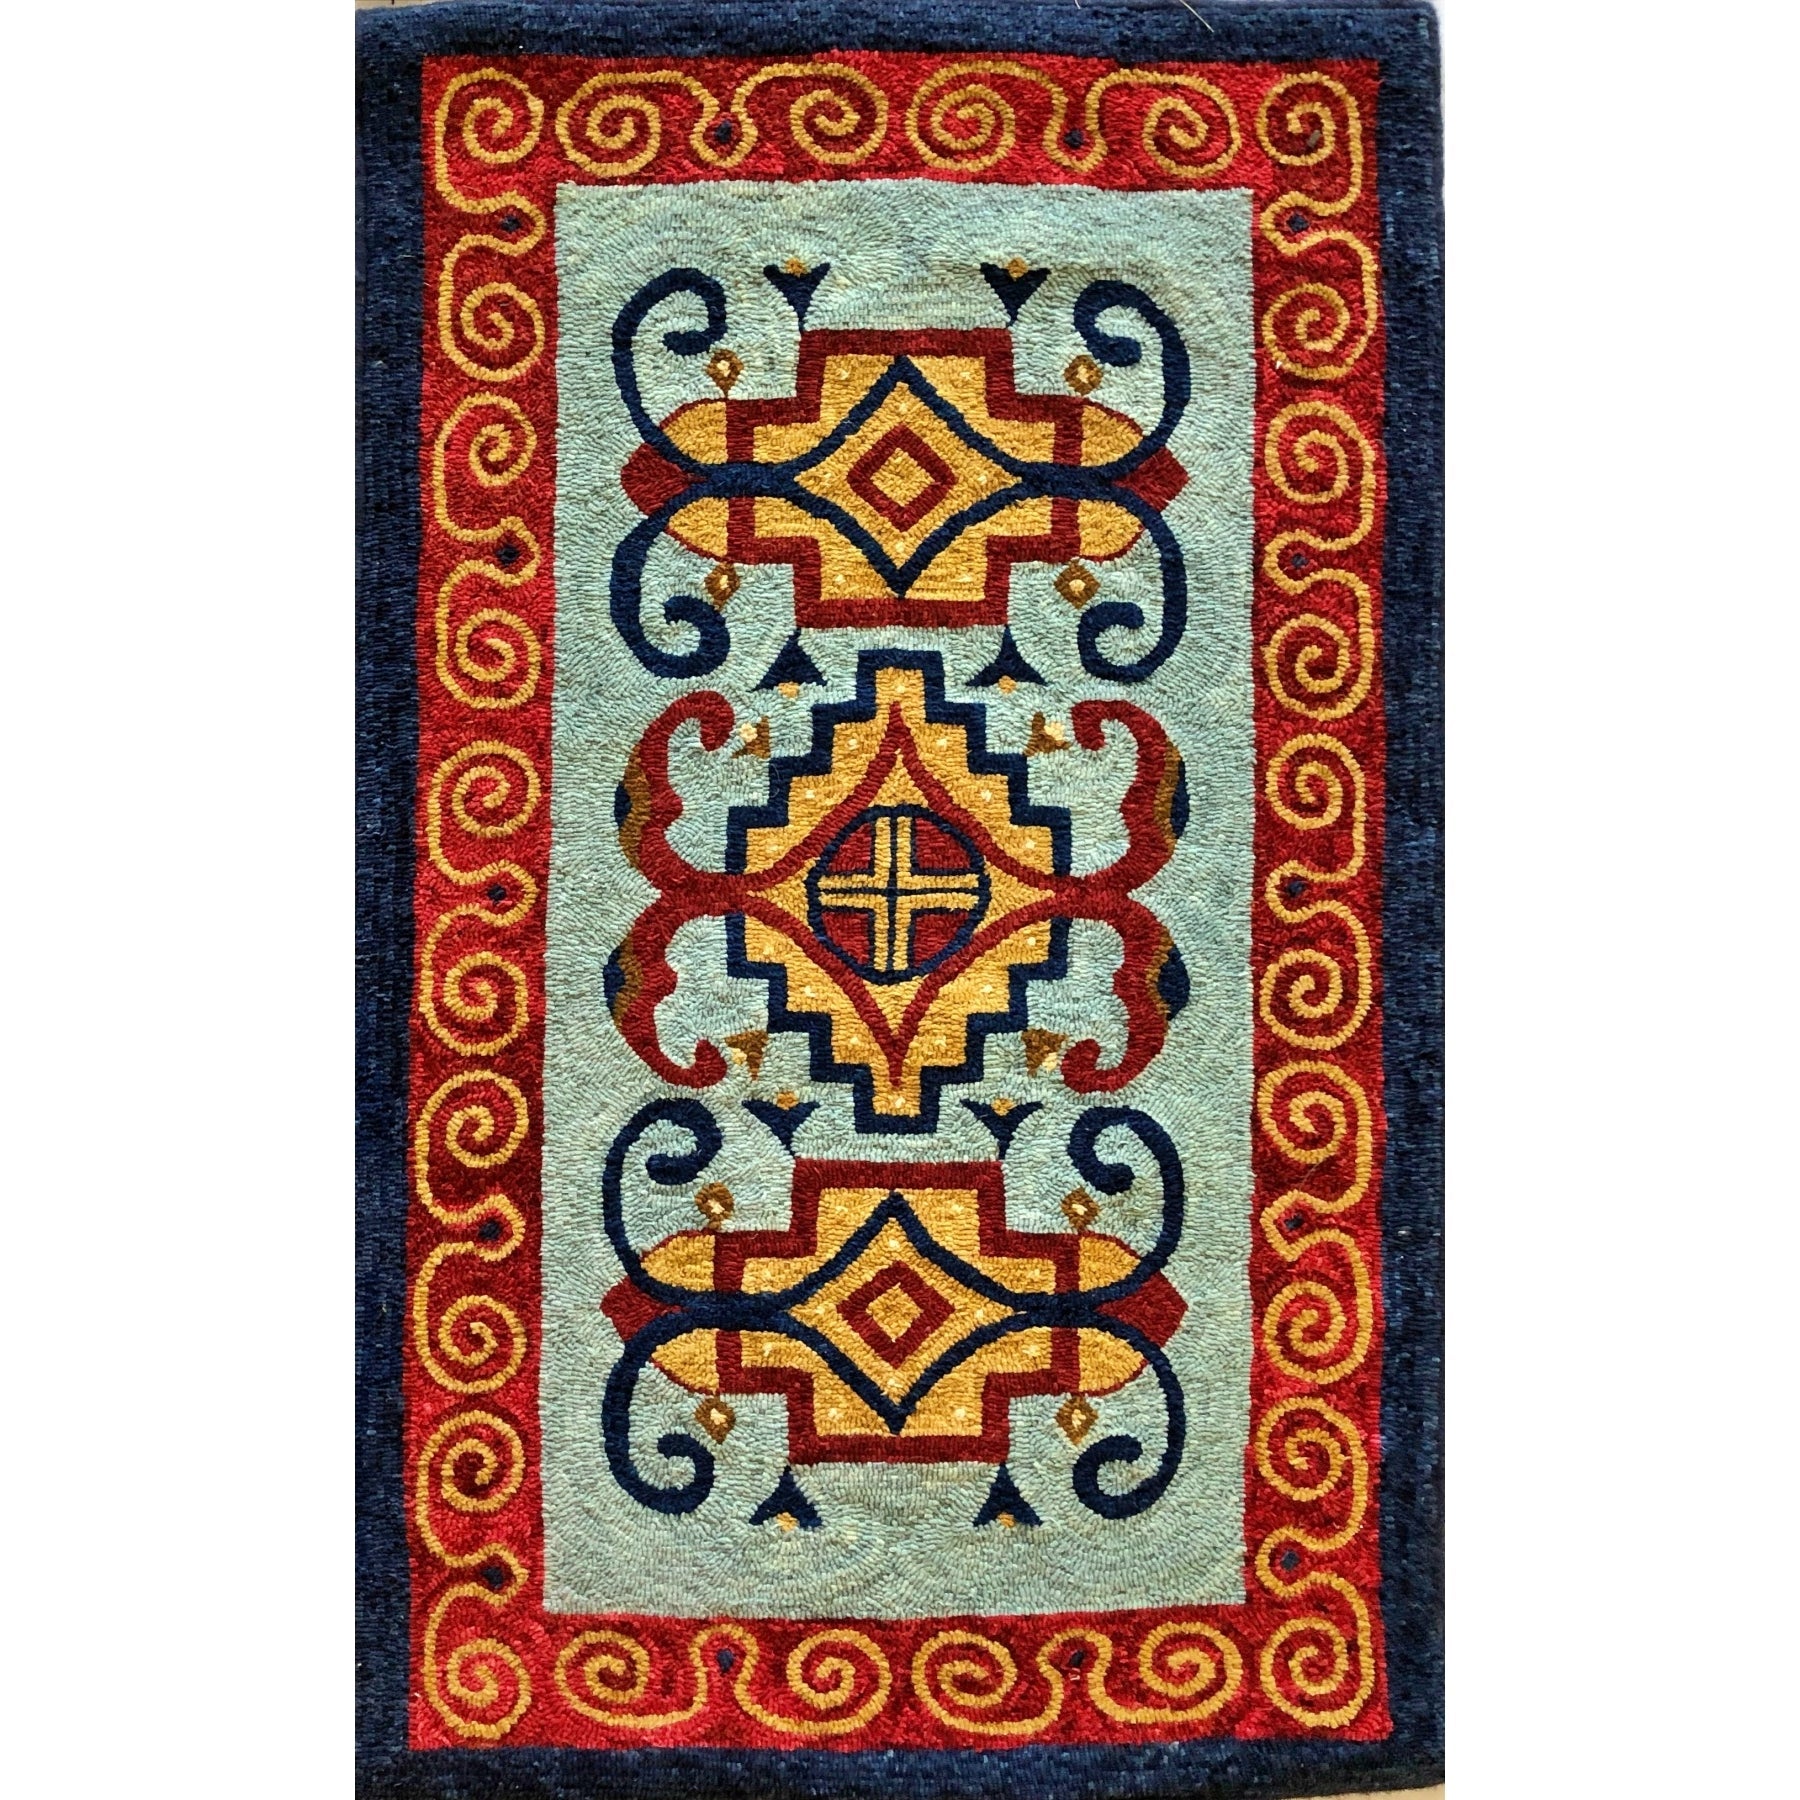 Micmac, rug hooked by Dawn Hebert